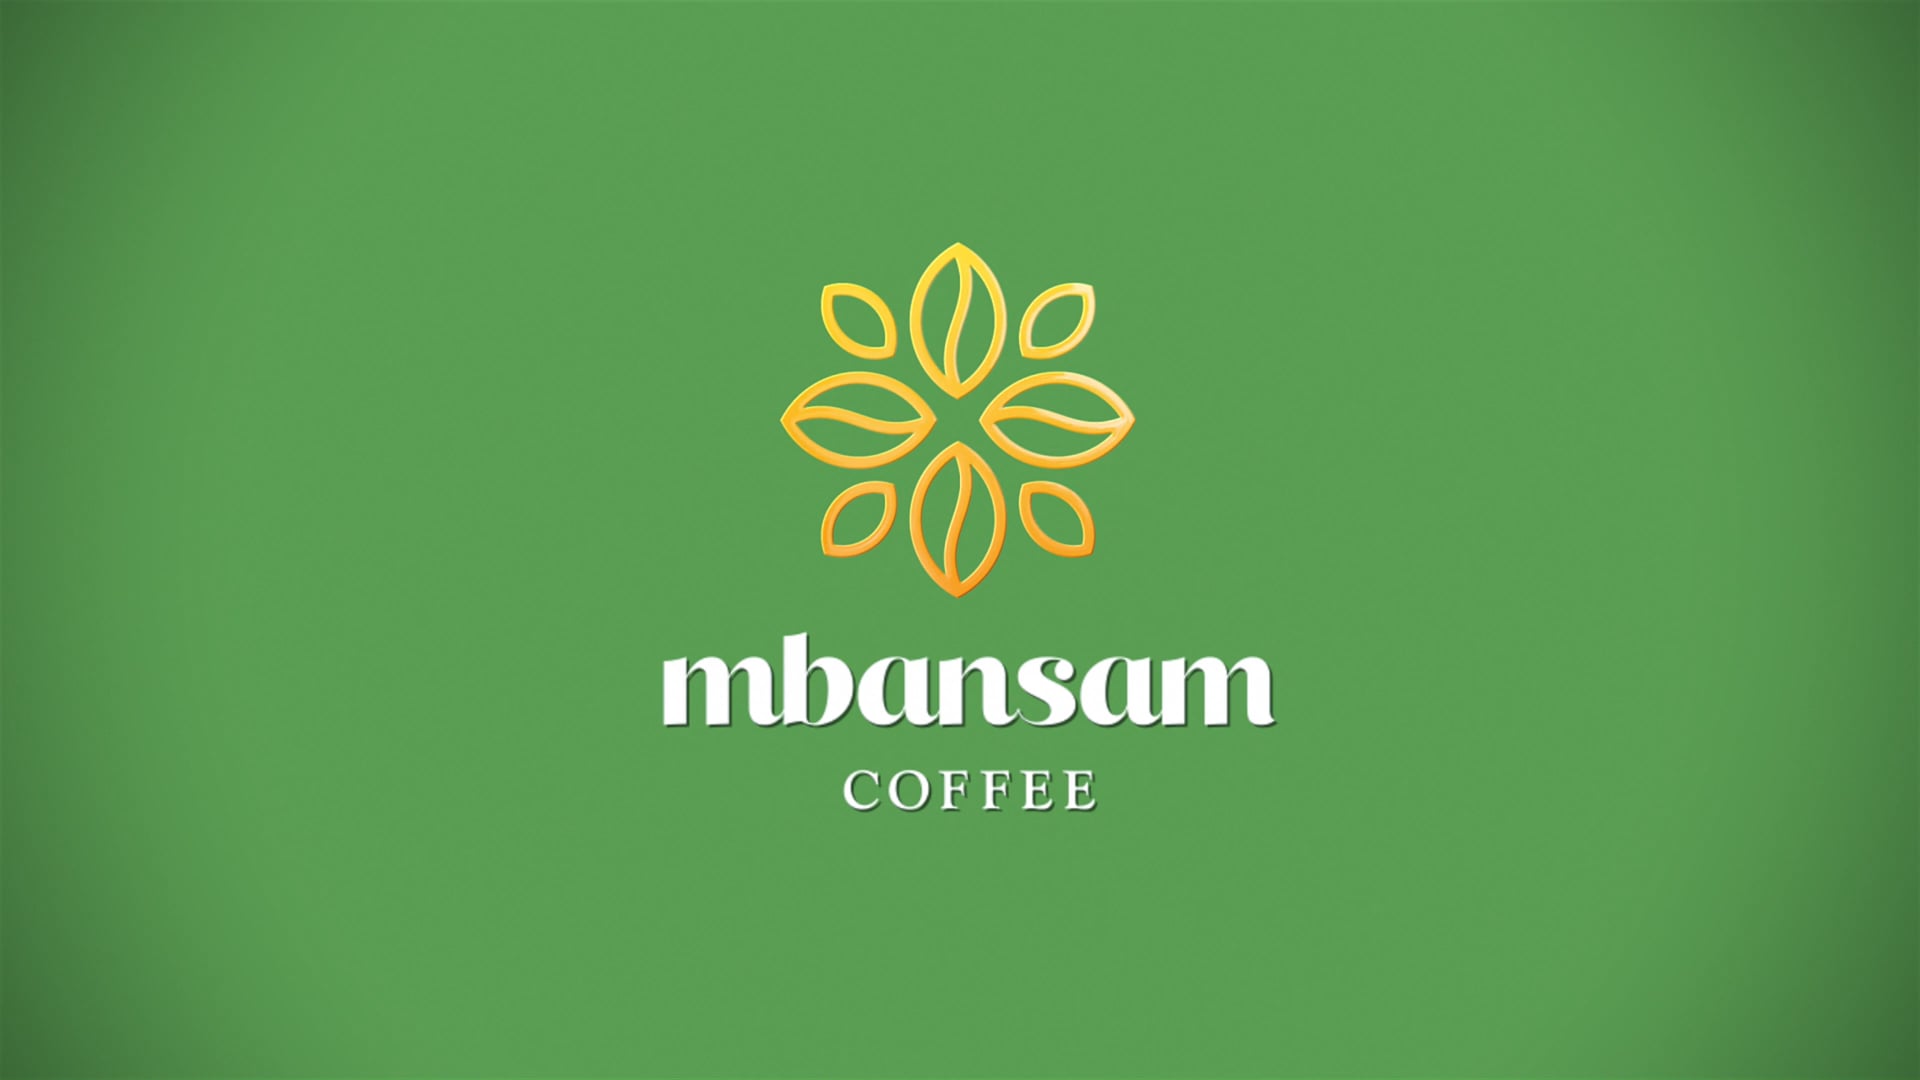 Mbansam Coffee Pitch Video